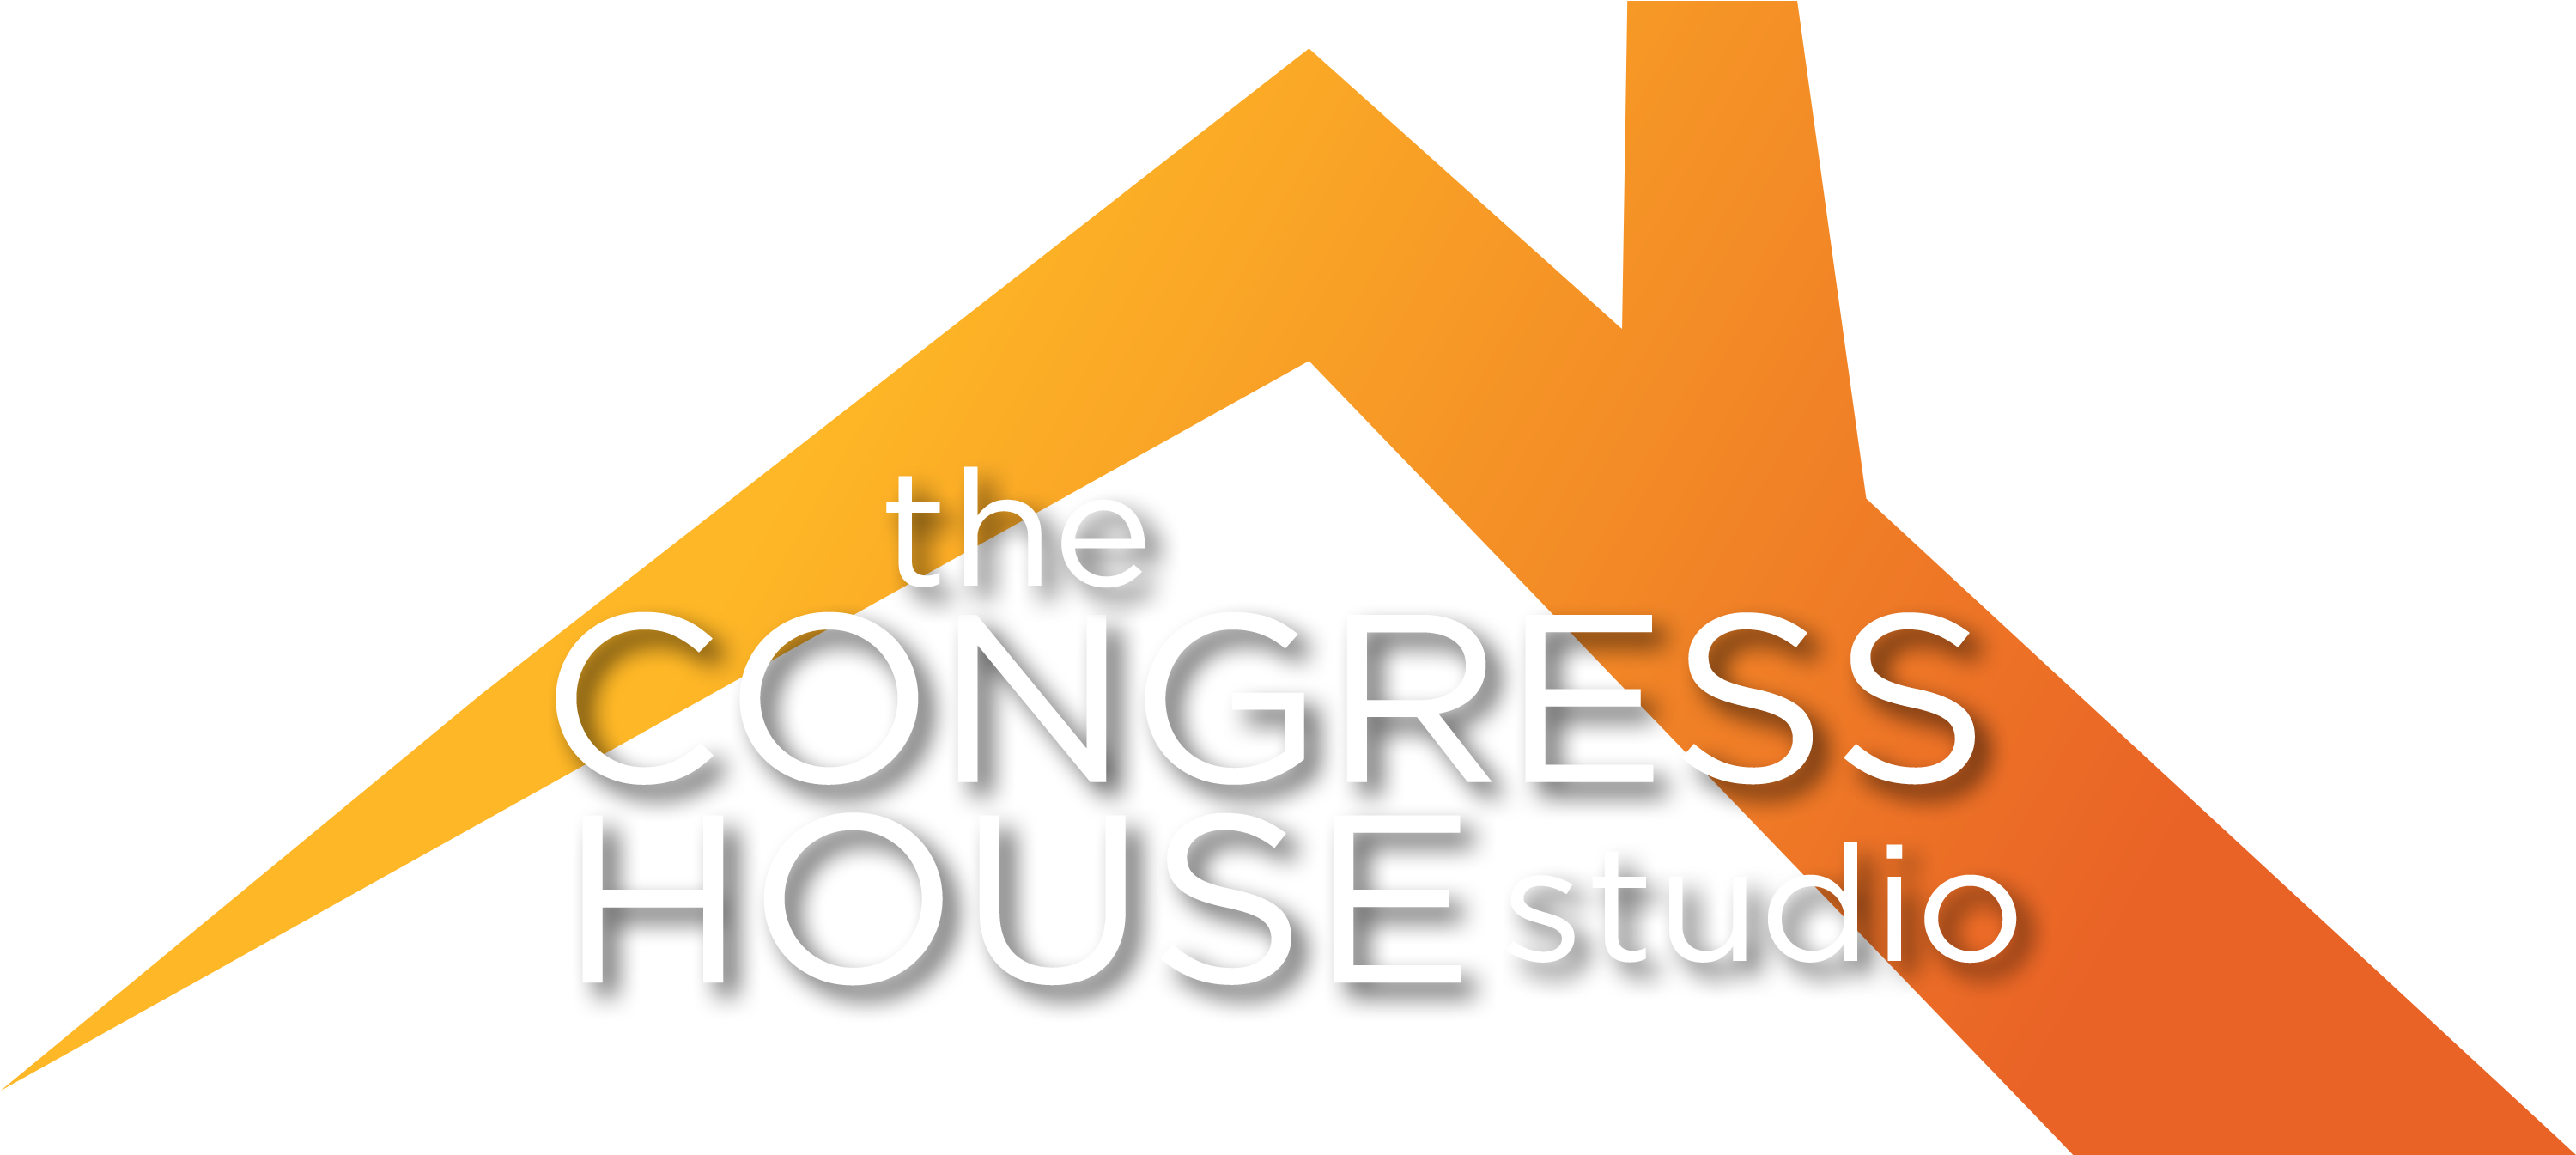 A Documentary About Mark Hallman & The Congress House - The Congress House Studio (3000x1800)